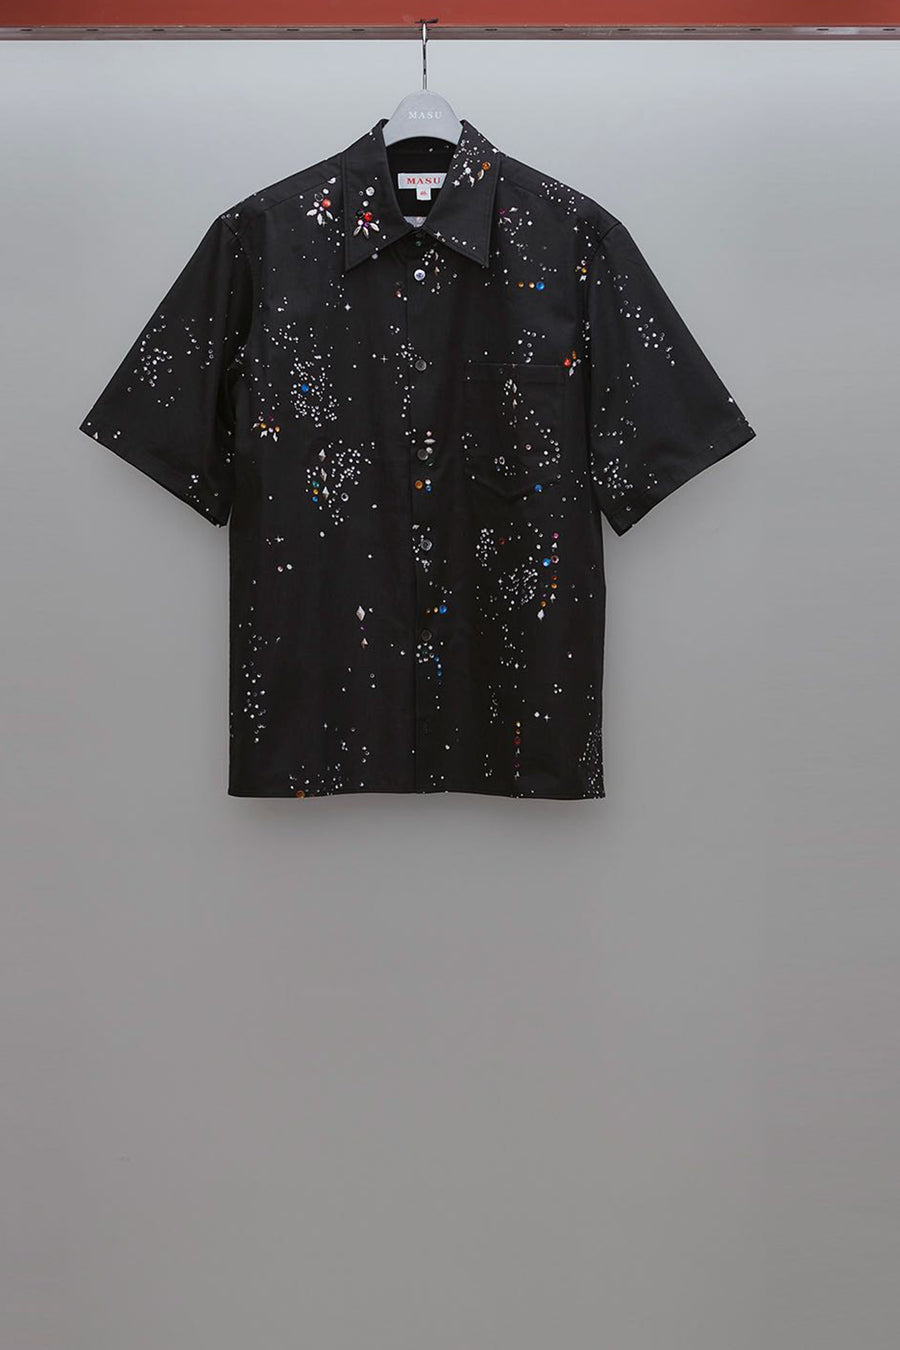 MASU galaxy shirt